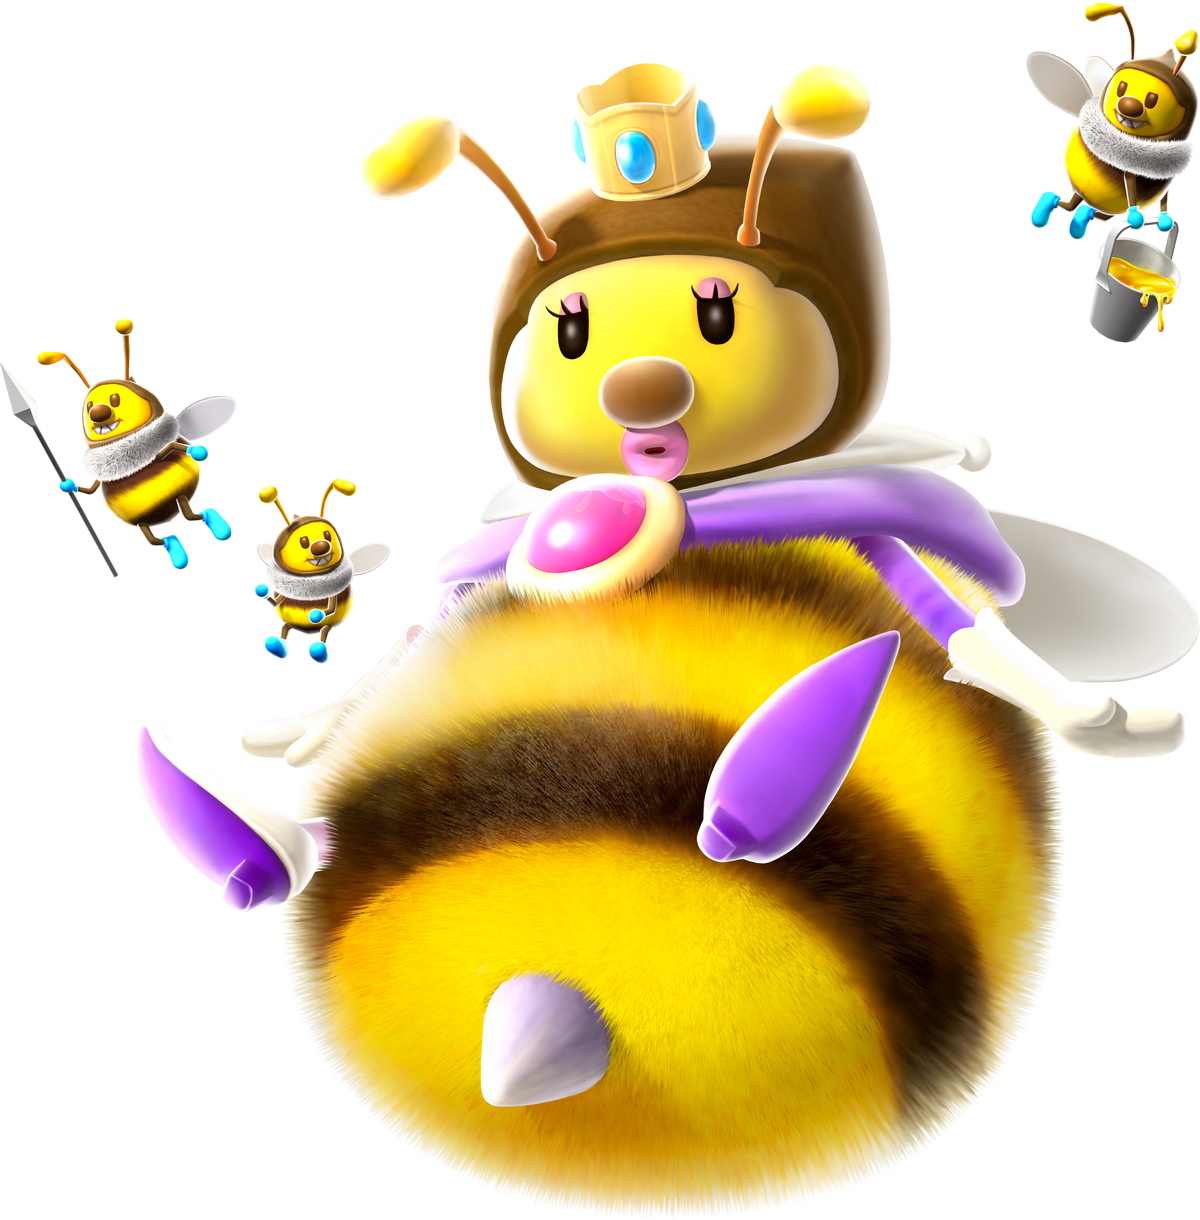 Queen Bee Entertainment - Wikipedia